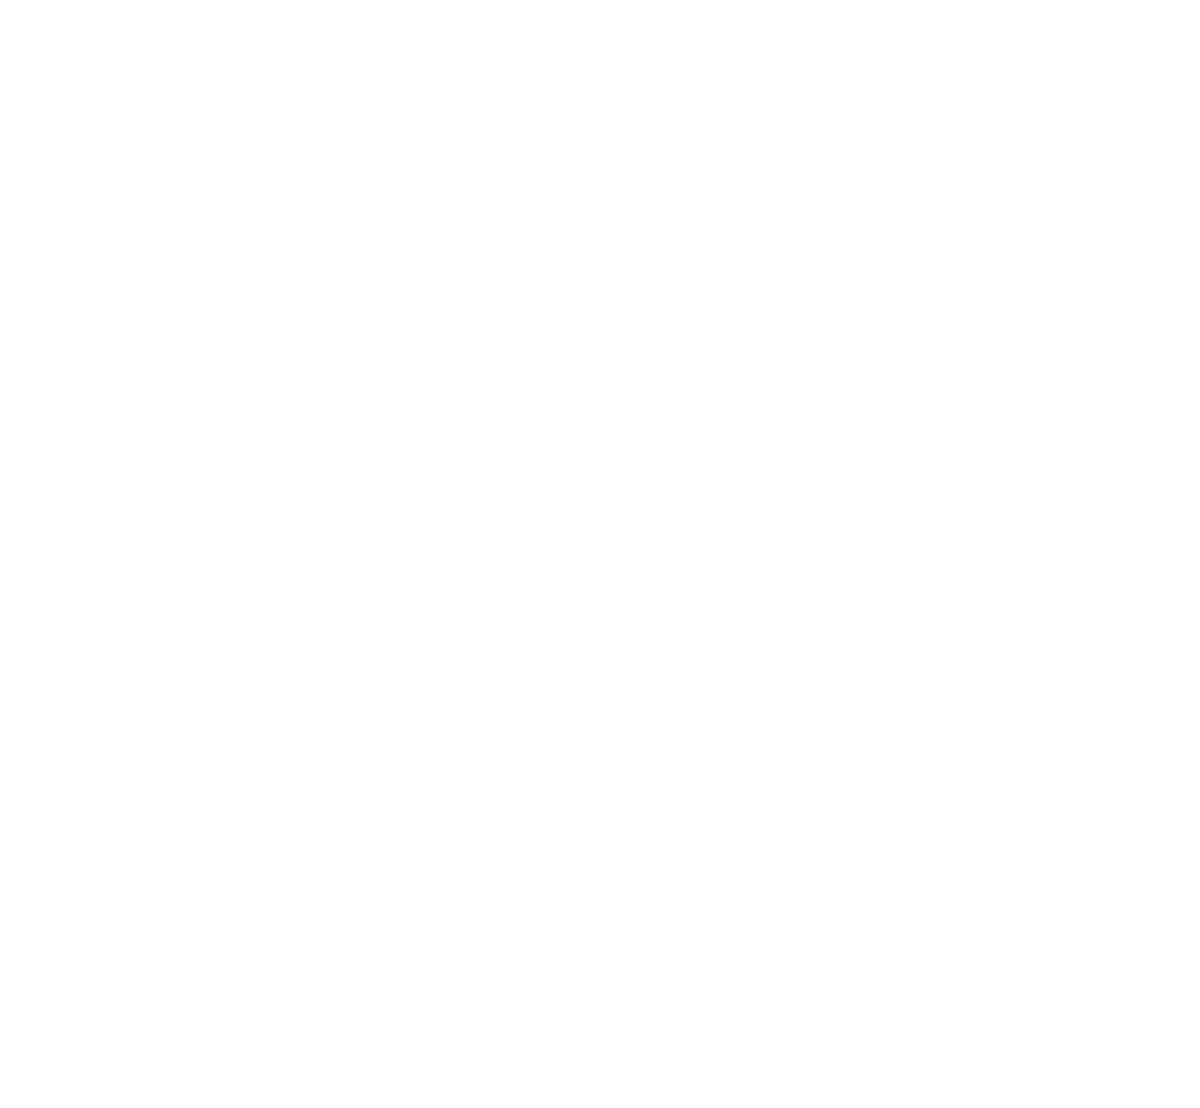 Yeguada Senillosa Turismo Rural